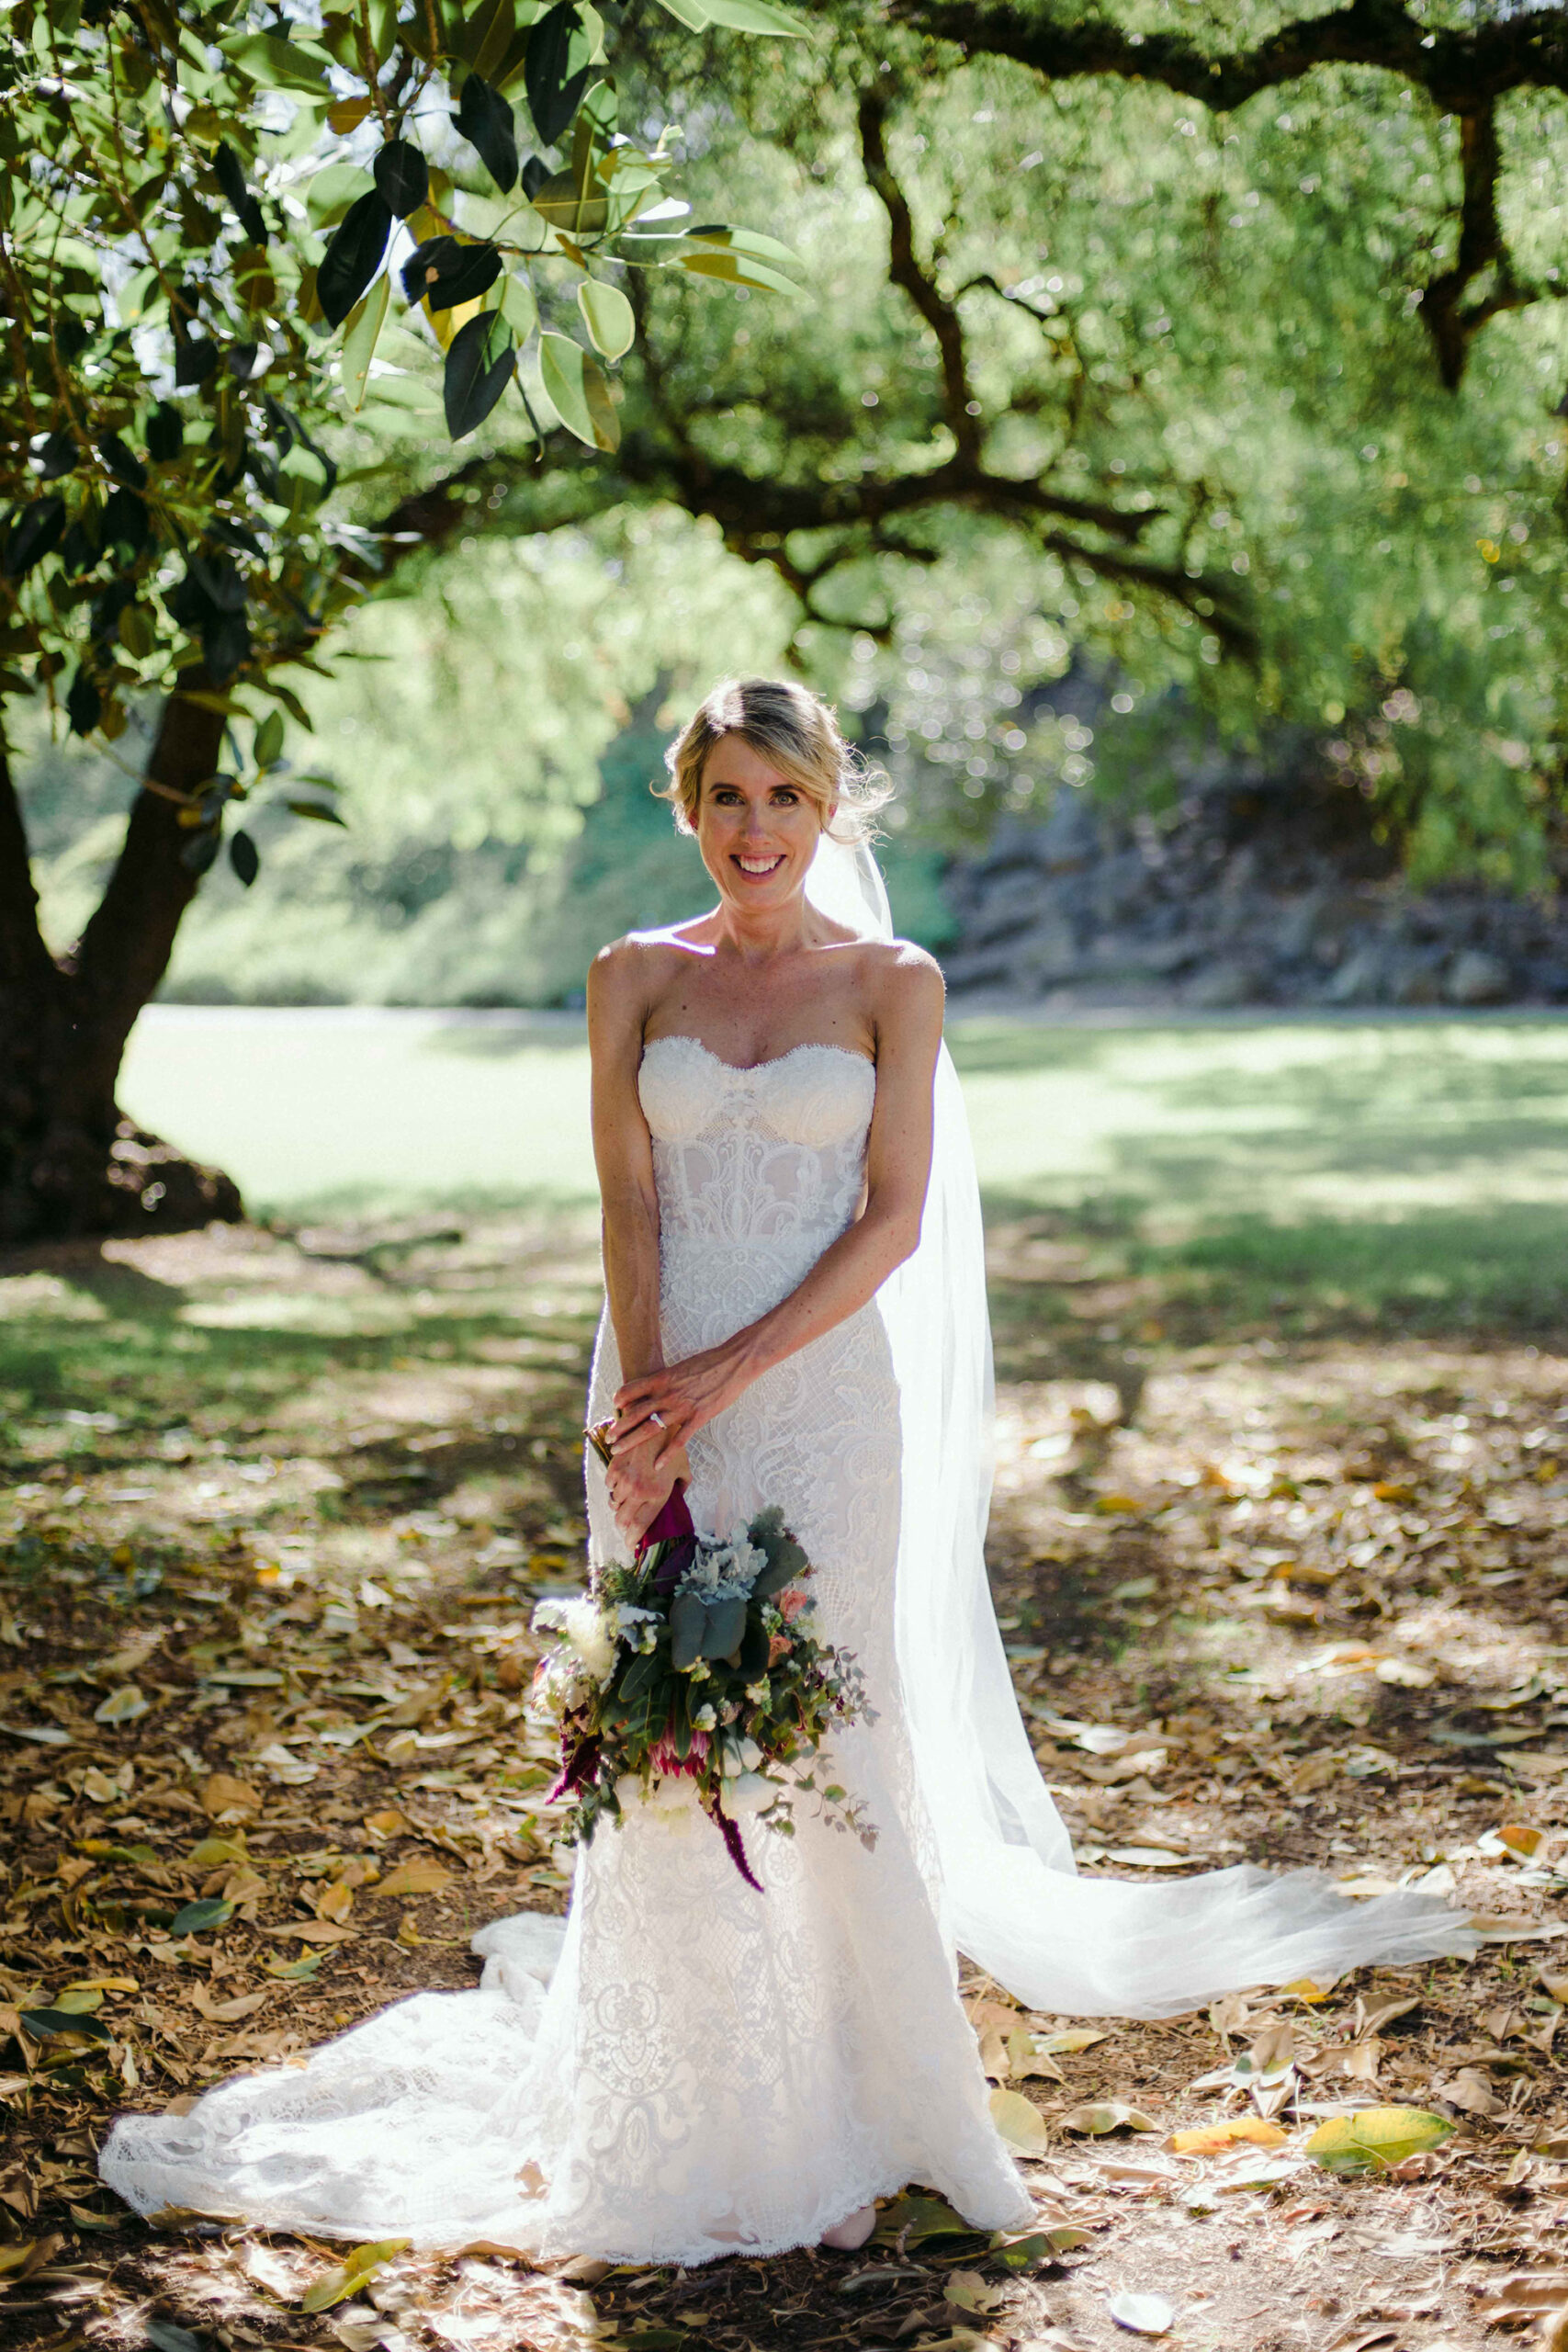 Pip_Toby_Rustic-Industrial-Wedding_Tess-Follett-Photography_SBS_023